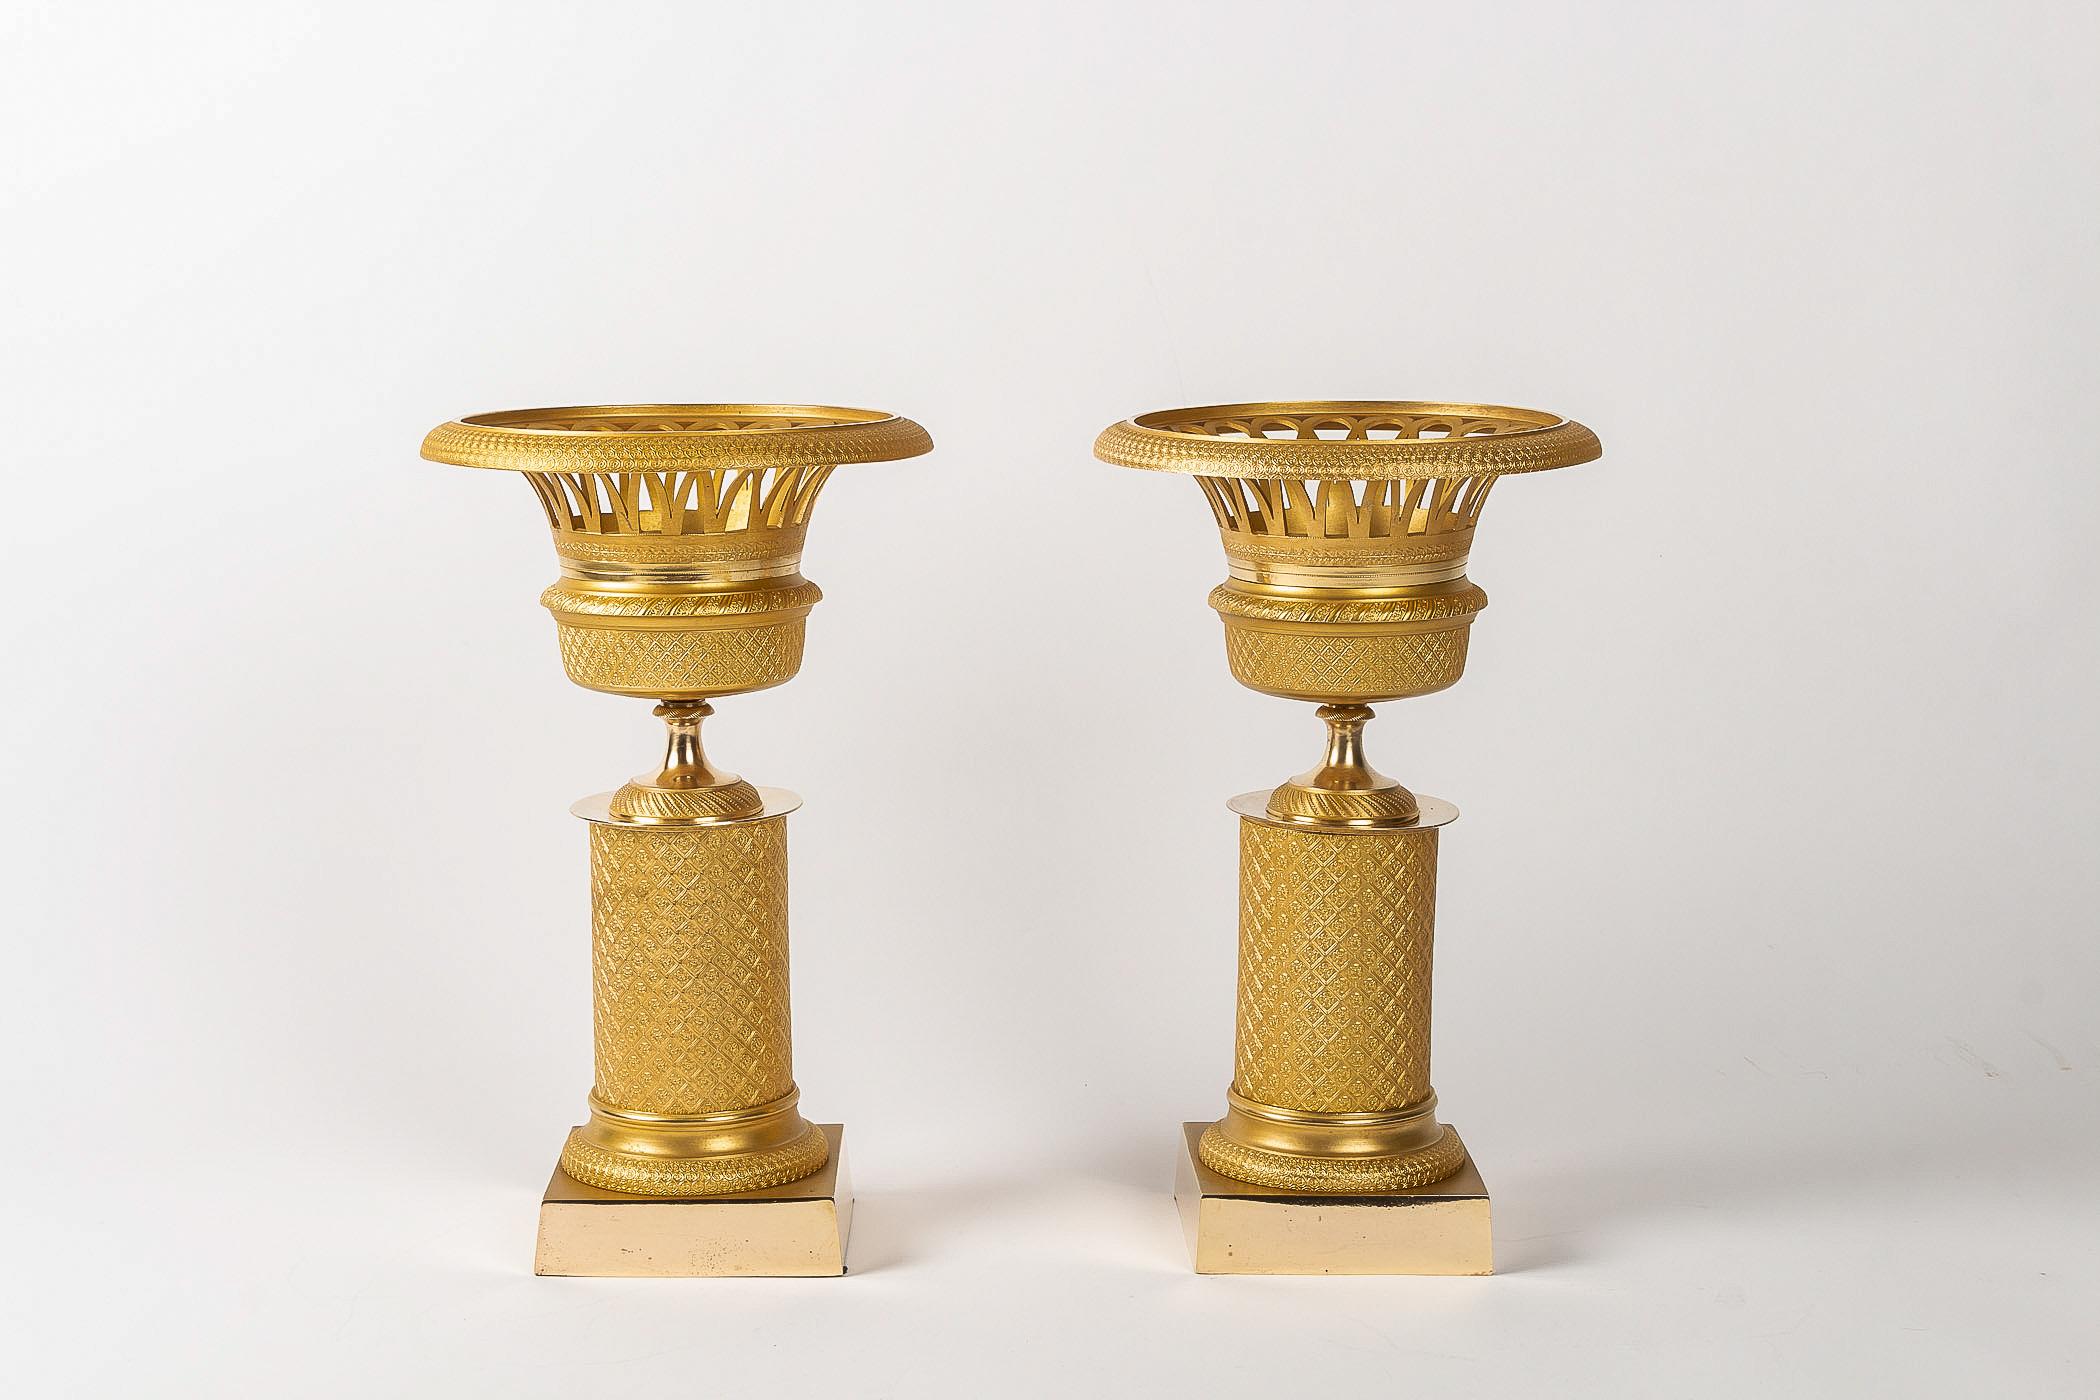 Restauration French Restoration Period Pair of Gilt-Bronze Cups, circa 1815-1830